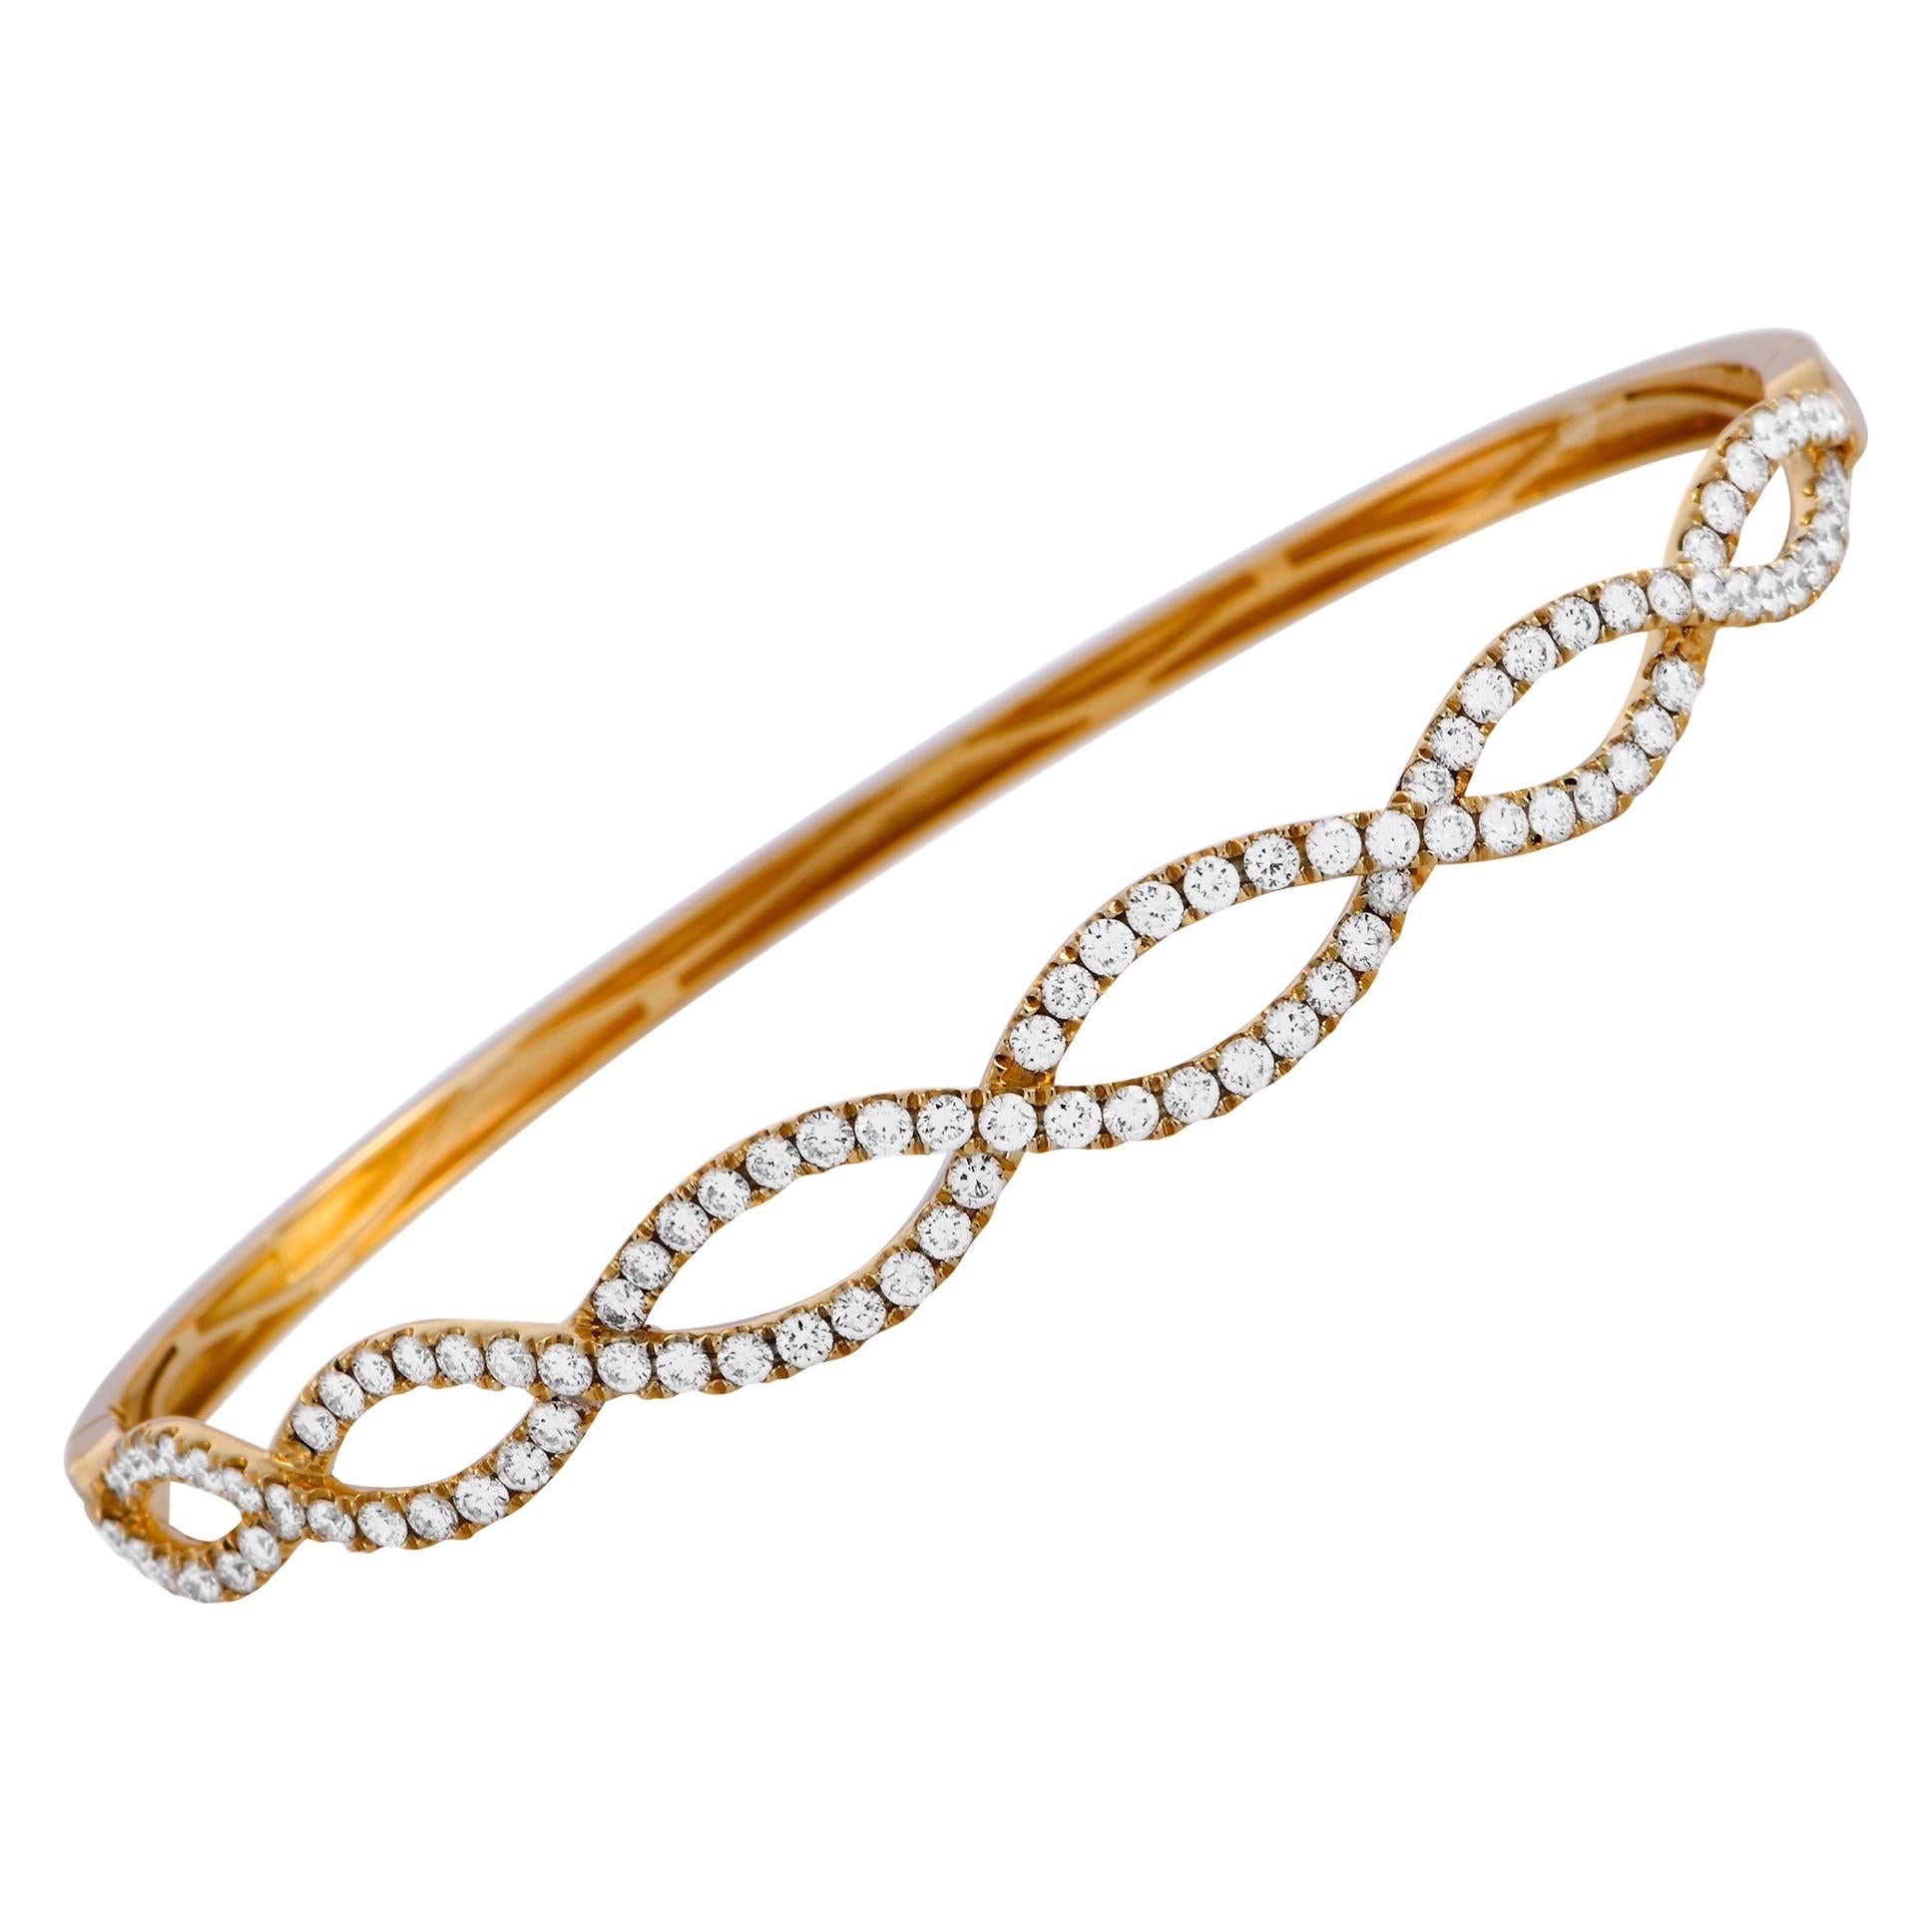 LB Exclusive 18 Karat Yellow Gold Diamond Bangle Bracelet